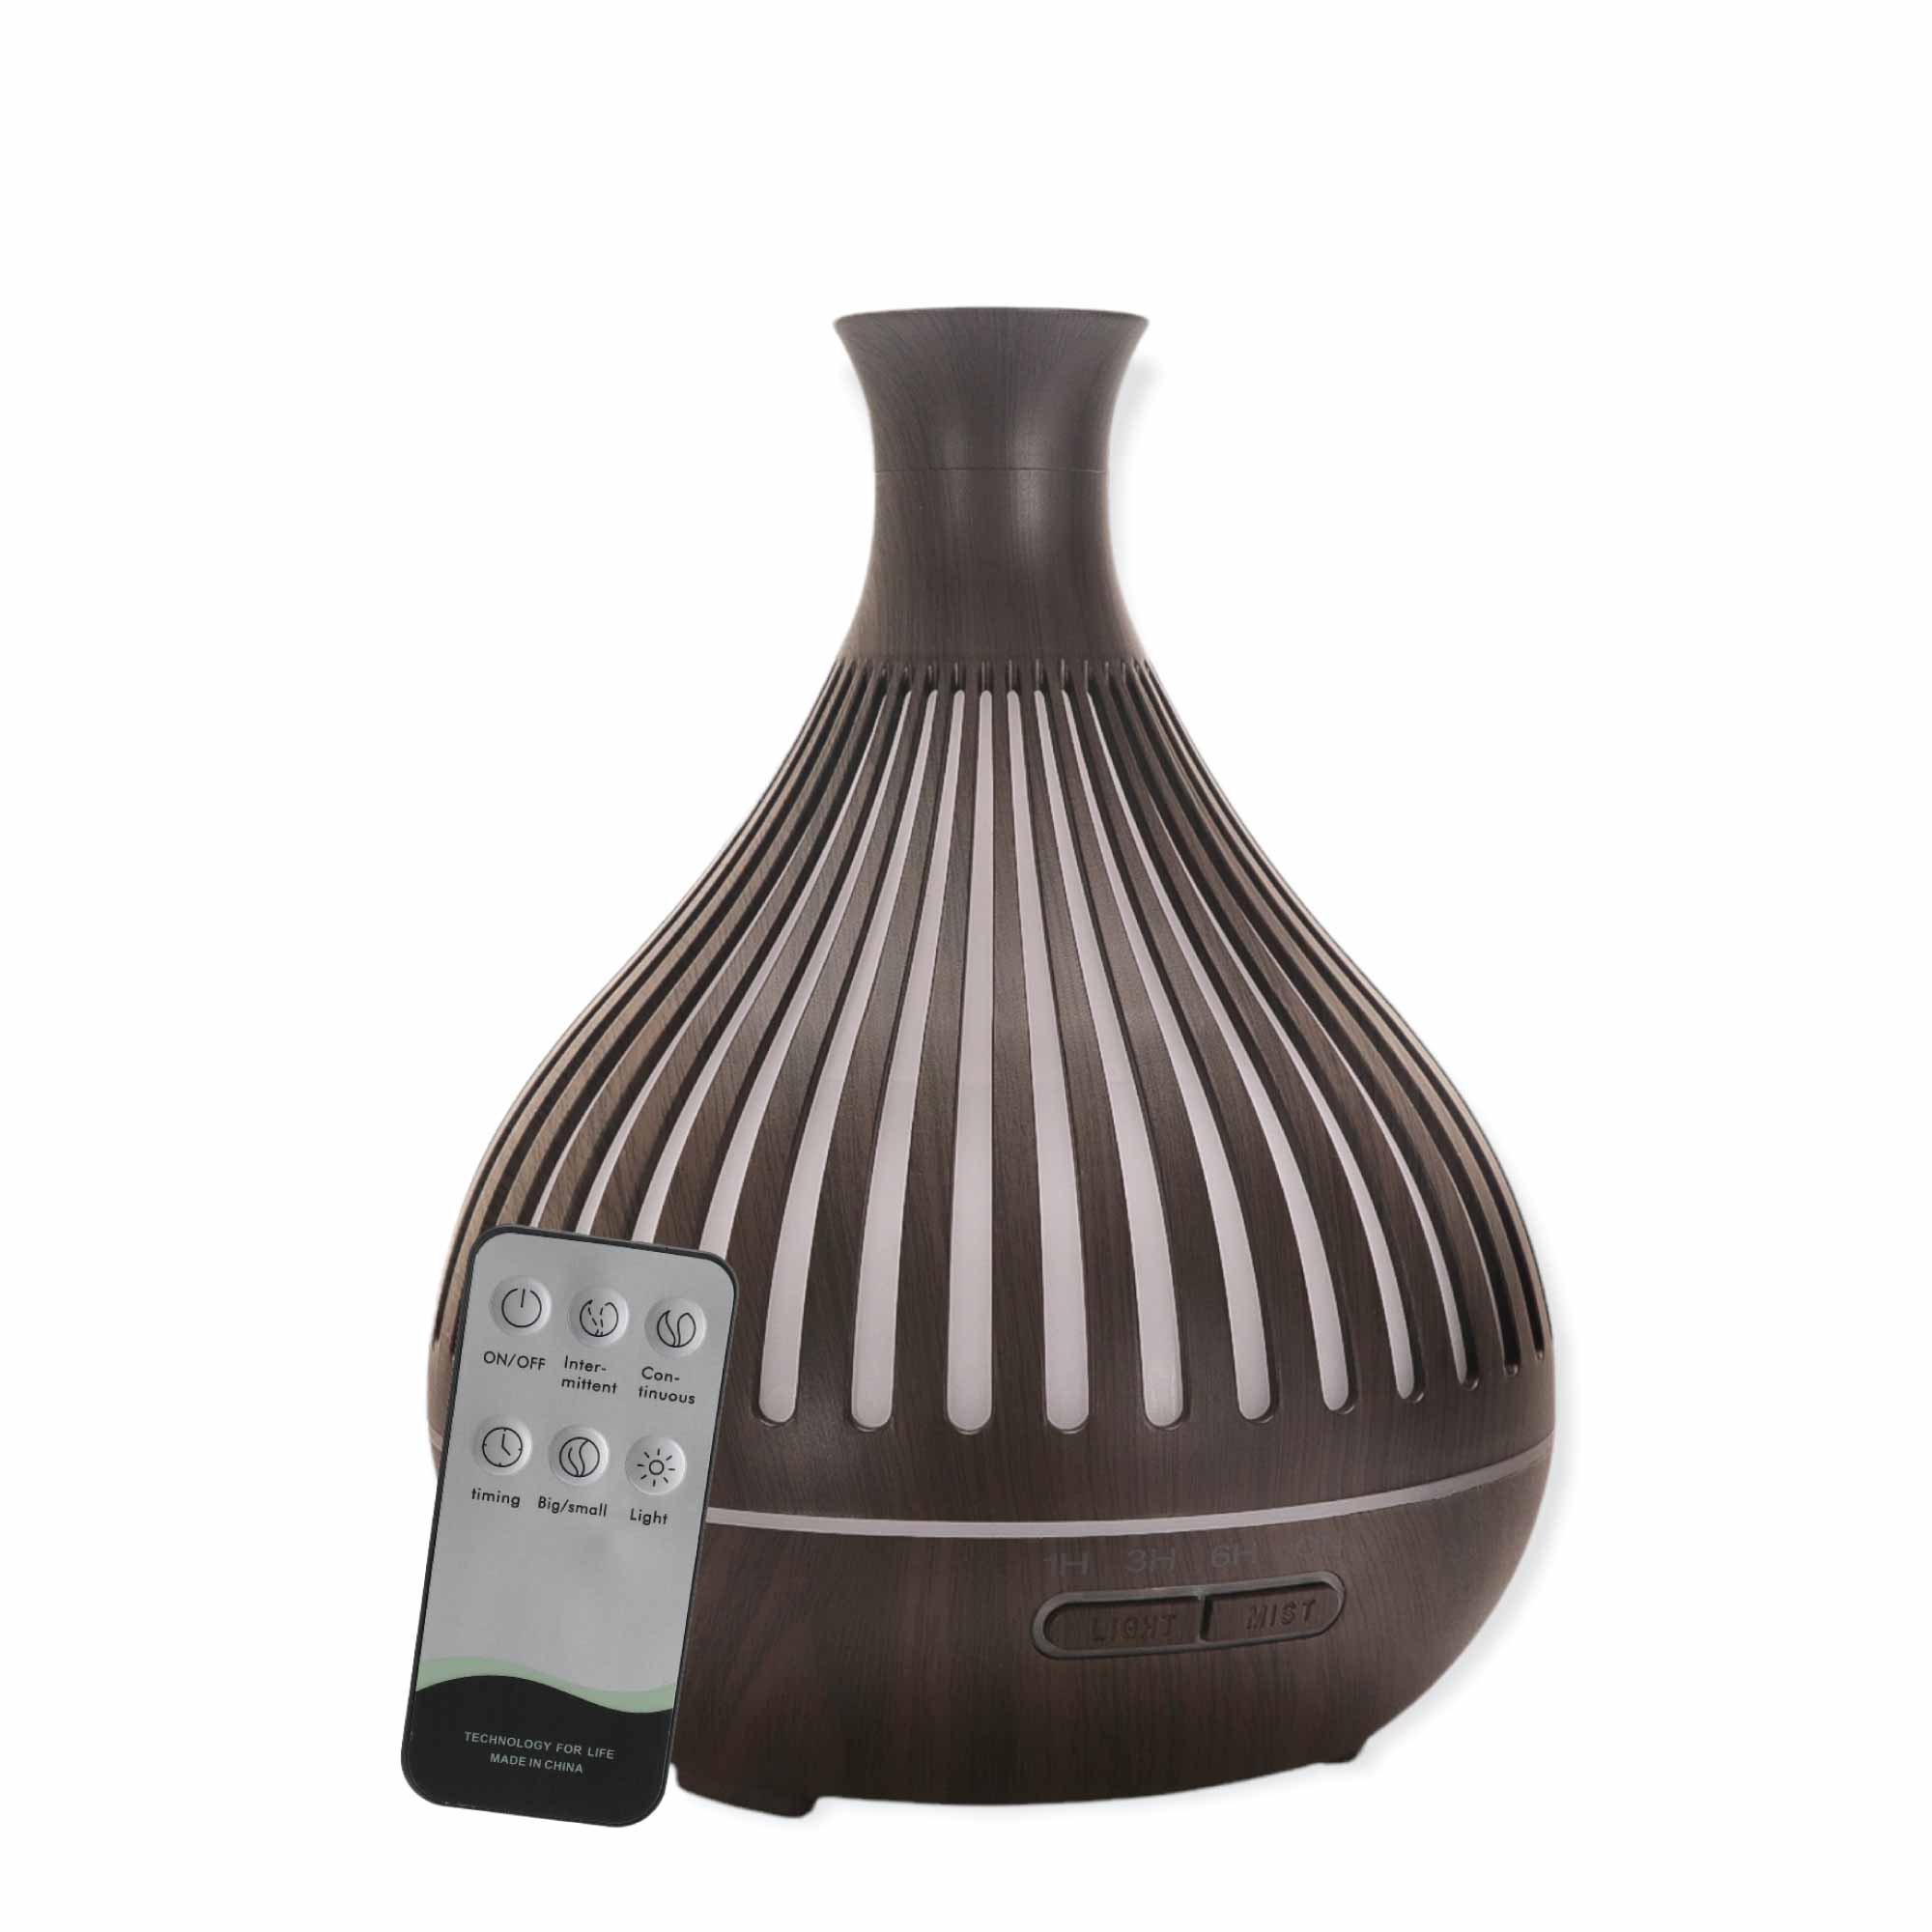 Essential Oil Aroma Diffuser - 400ml Remote Dark Wood Ultrasonic Mist Humidifier